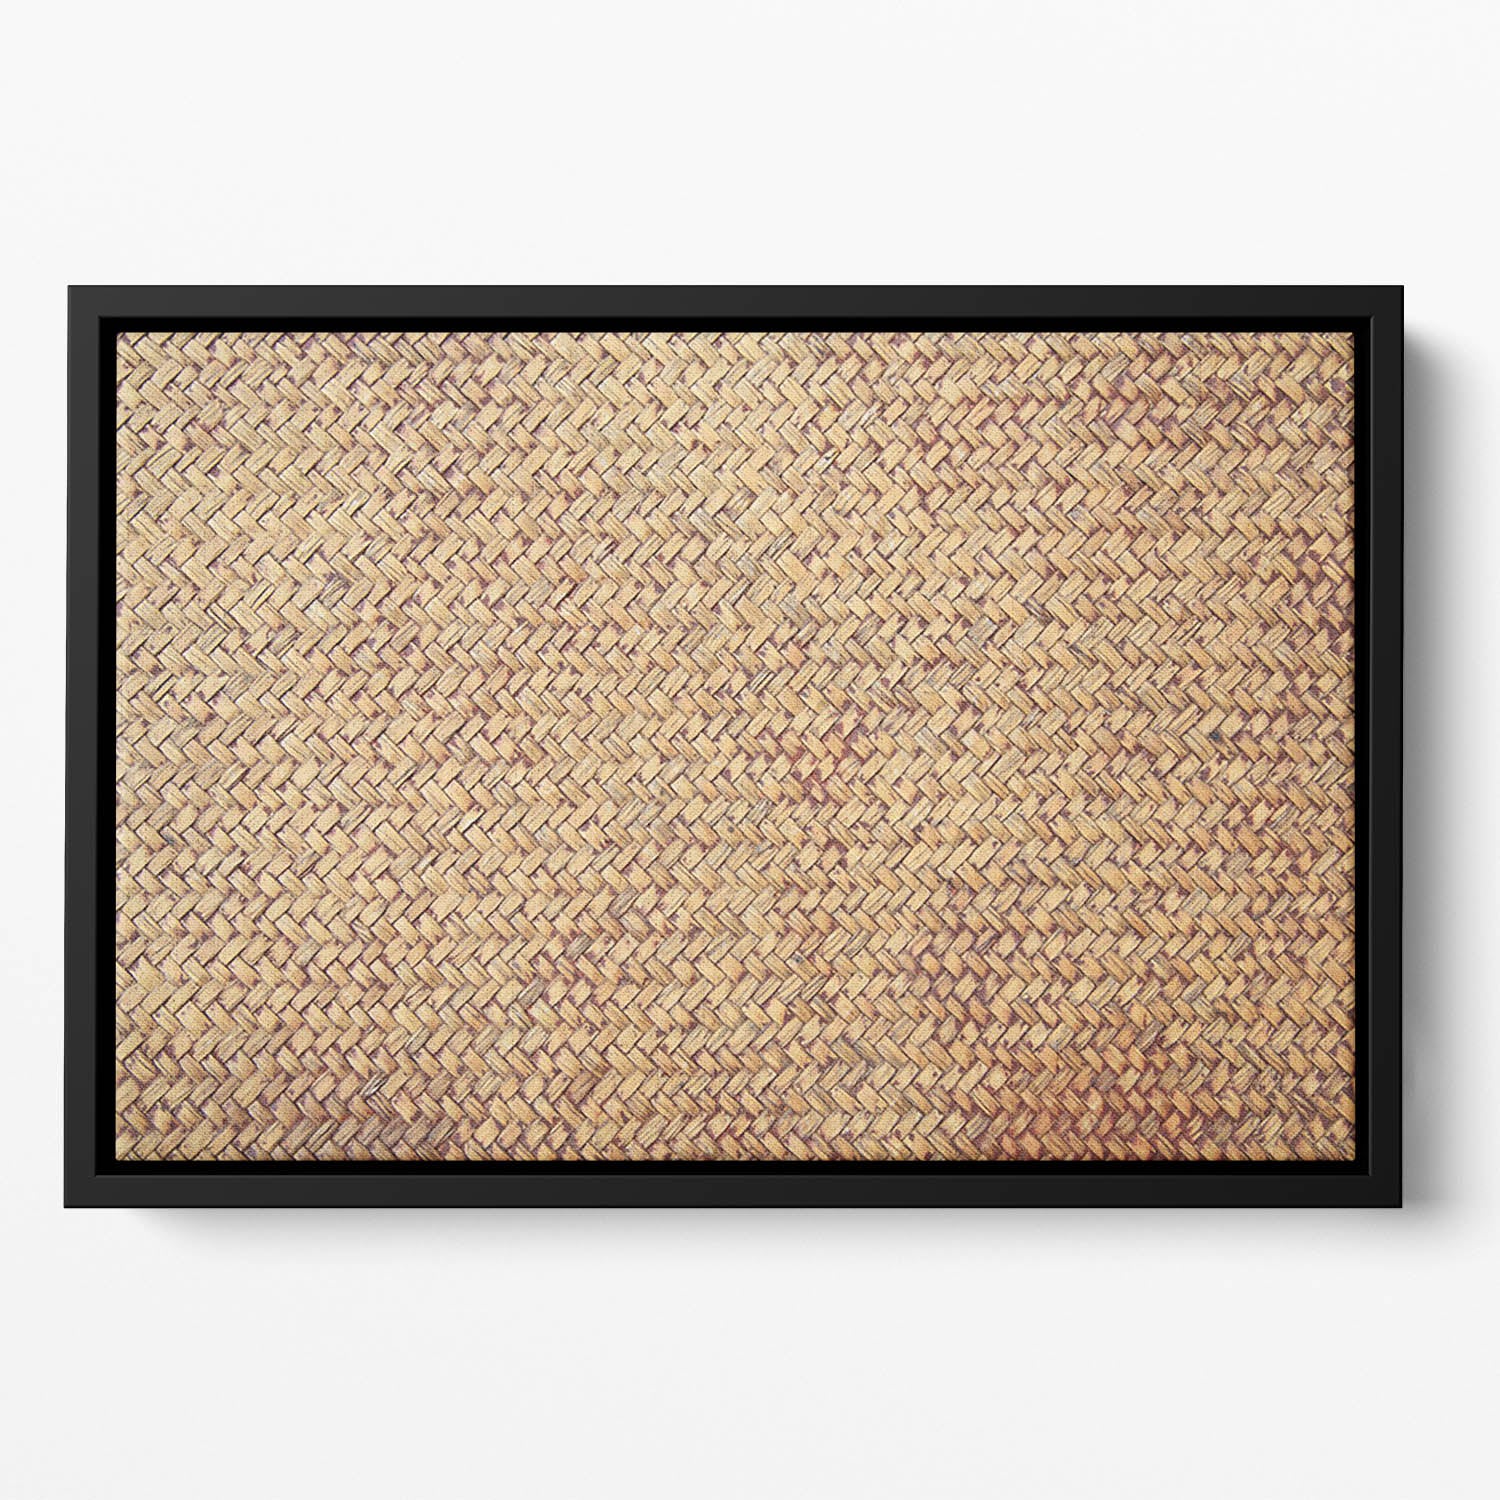 Brown rattan weave Floating Framed Canvas